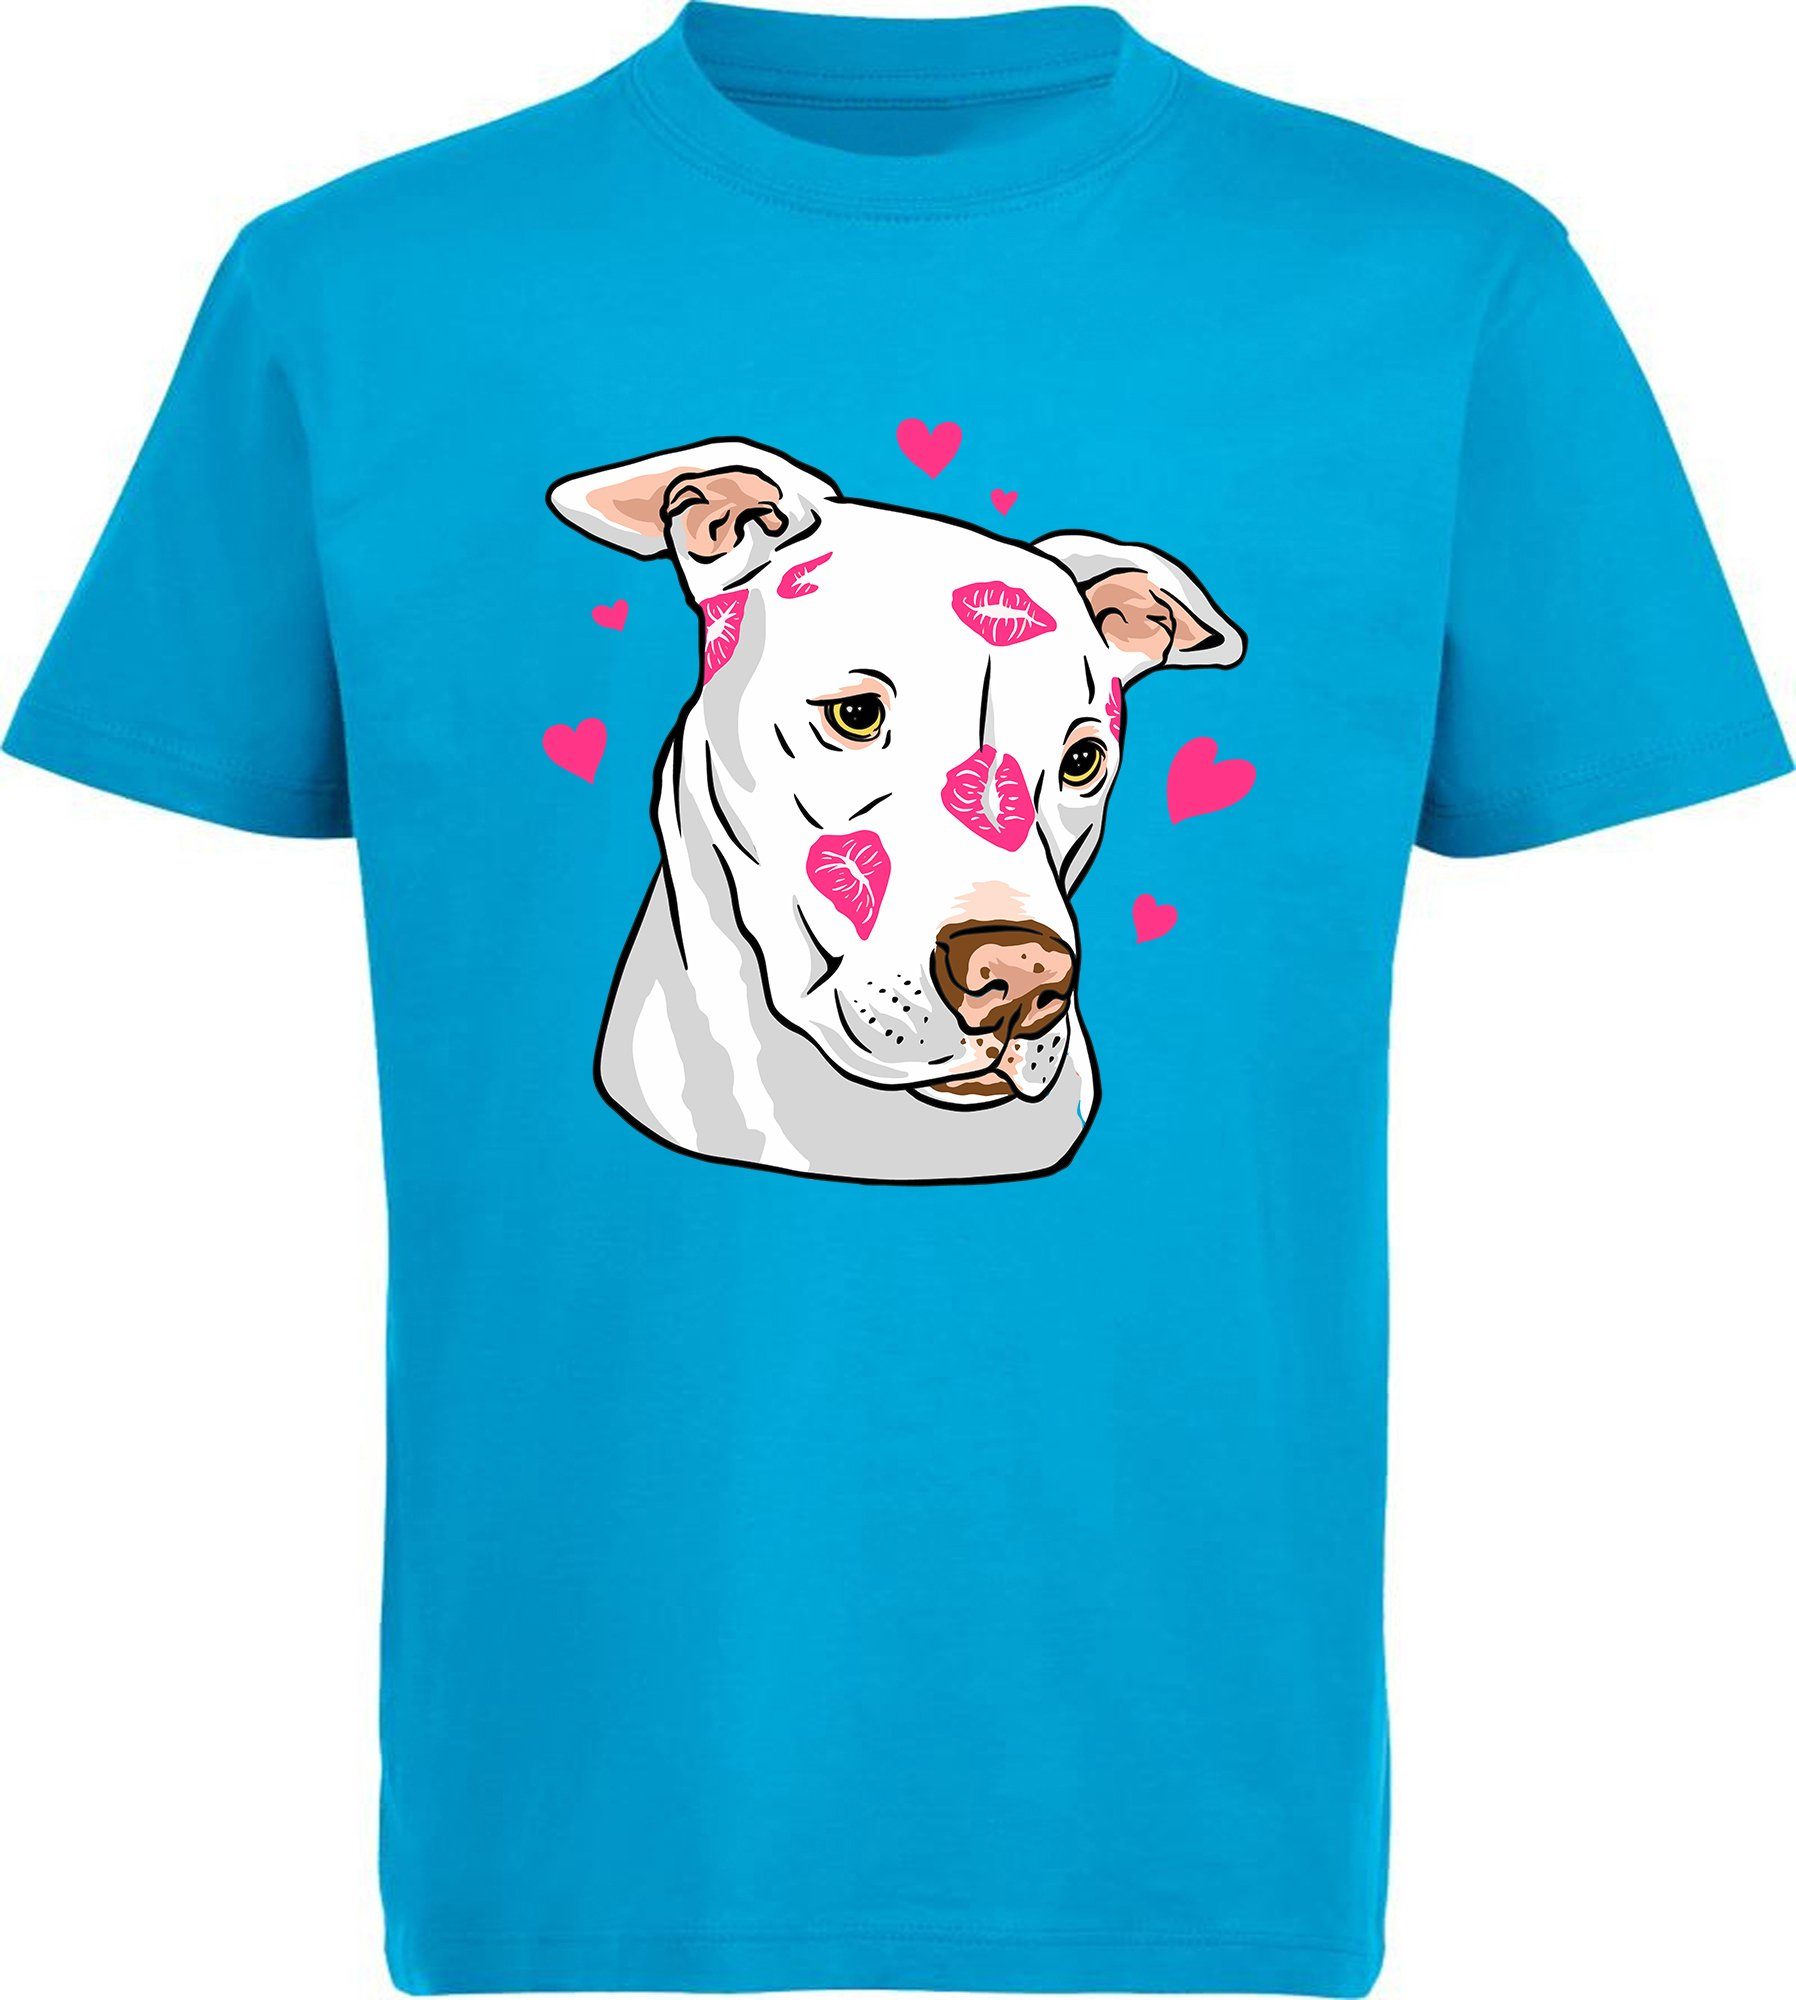 MyDesign24 Print-Shirt blau Hunde Aufdruck, aqua T-Shirt i229 mit Pitbull bedrucktes Baumwollshirt - Herzen Kinder mit